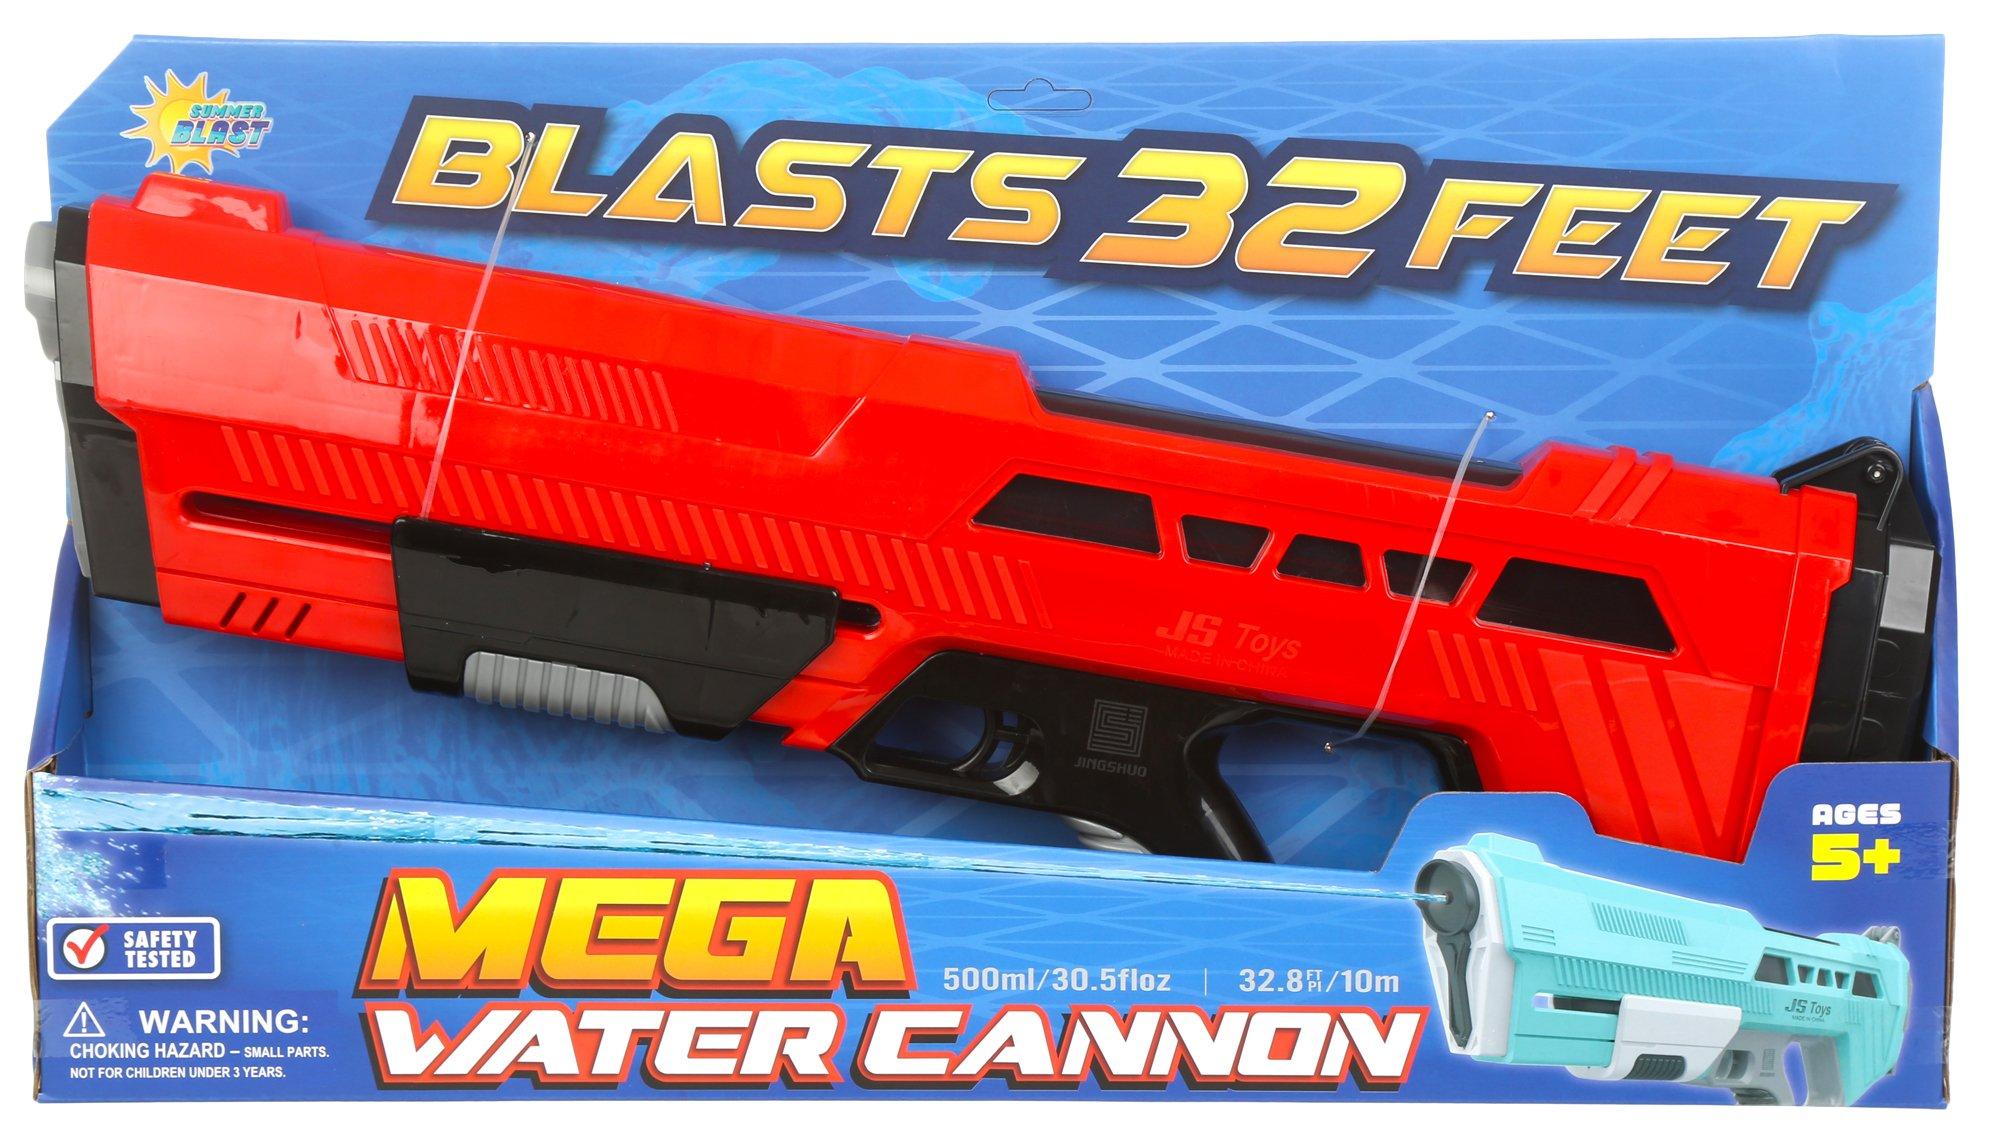 Mega Water Canon Toy Gun